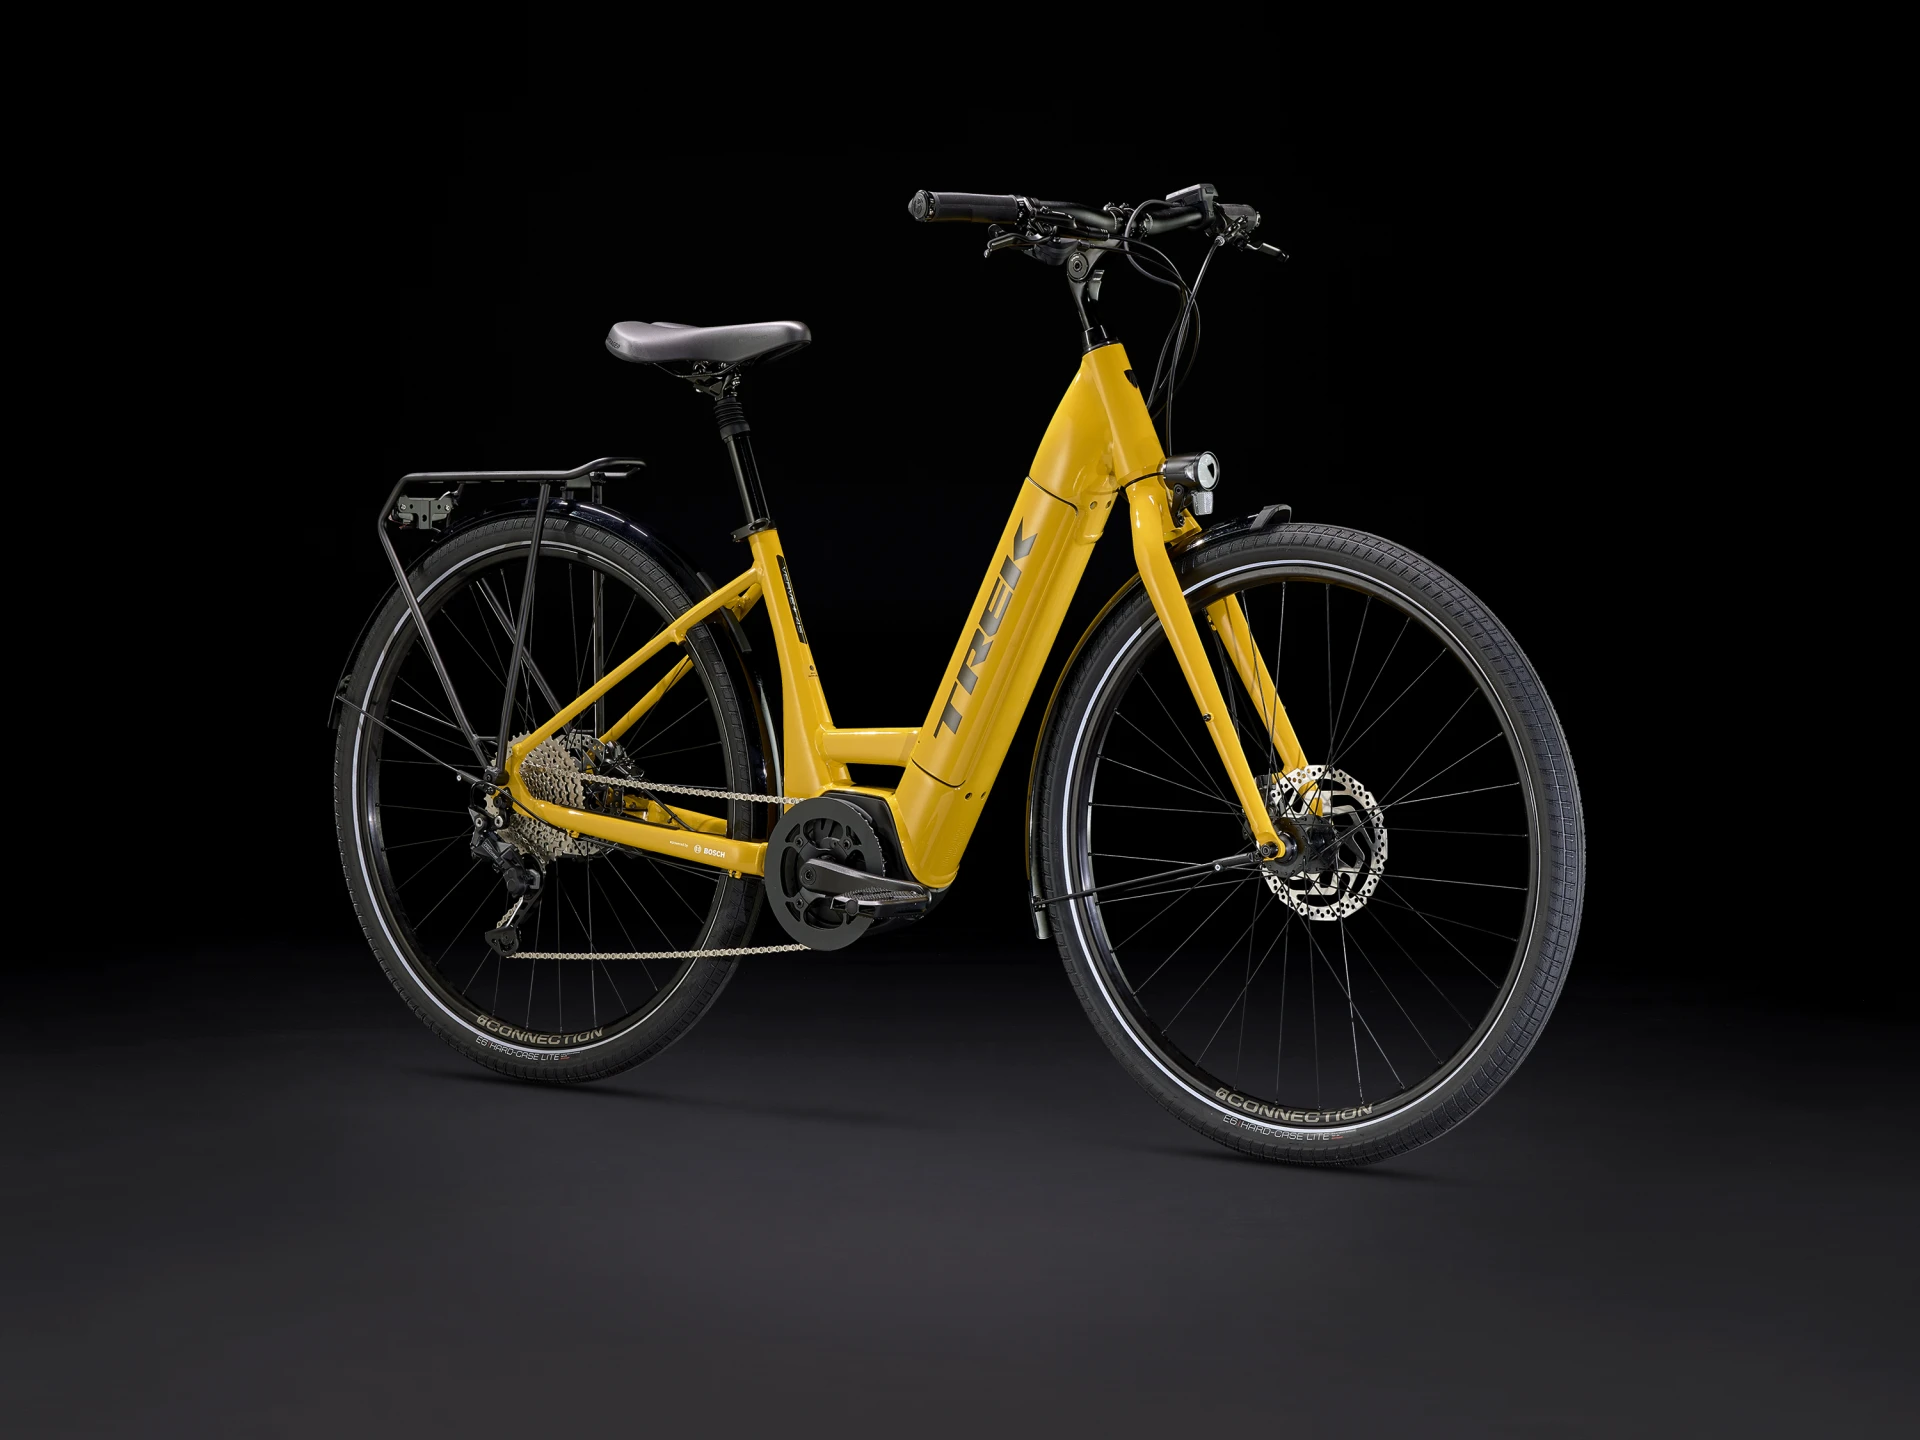 VervePlus4SLowstep Electric Bike, electric bicycle, hybrid e-bike